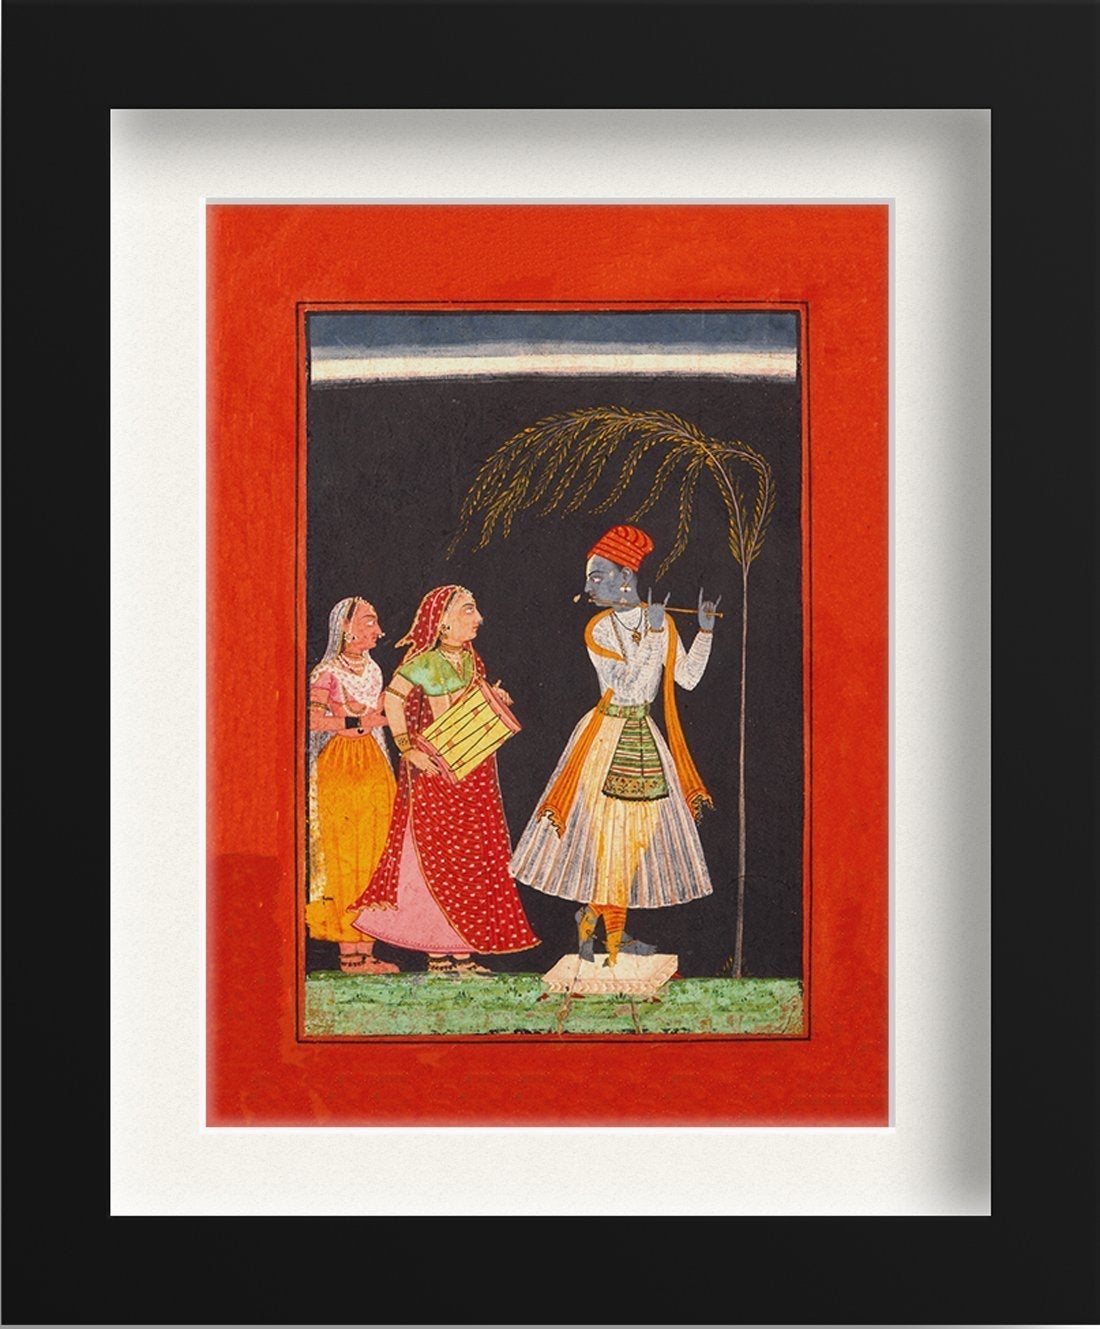 Lahula Ragaputra, Son of Dipak Raga, Folio from a Ragamala (Garland of Melodies) Painting - Meri Deewar - MeriDeewar